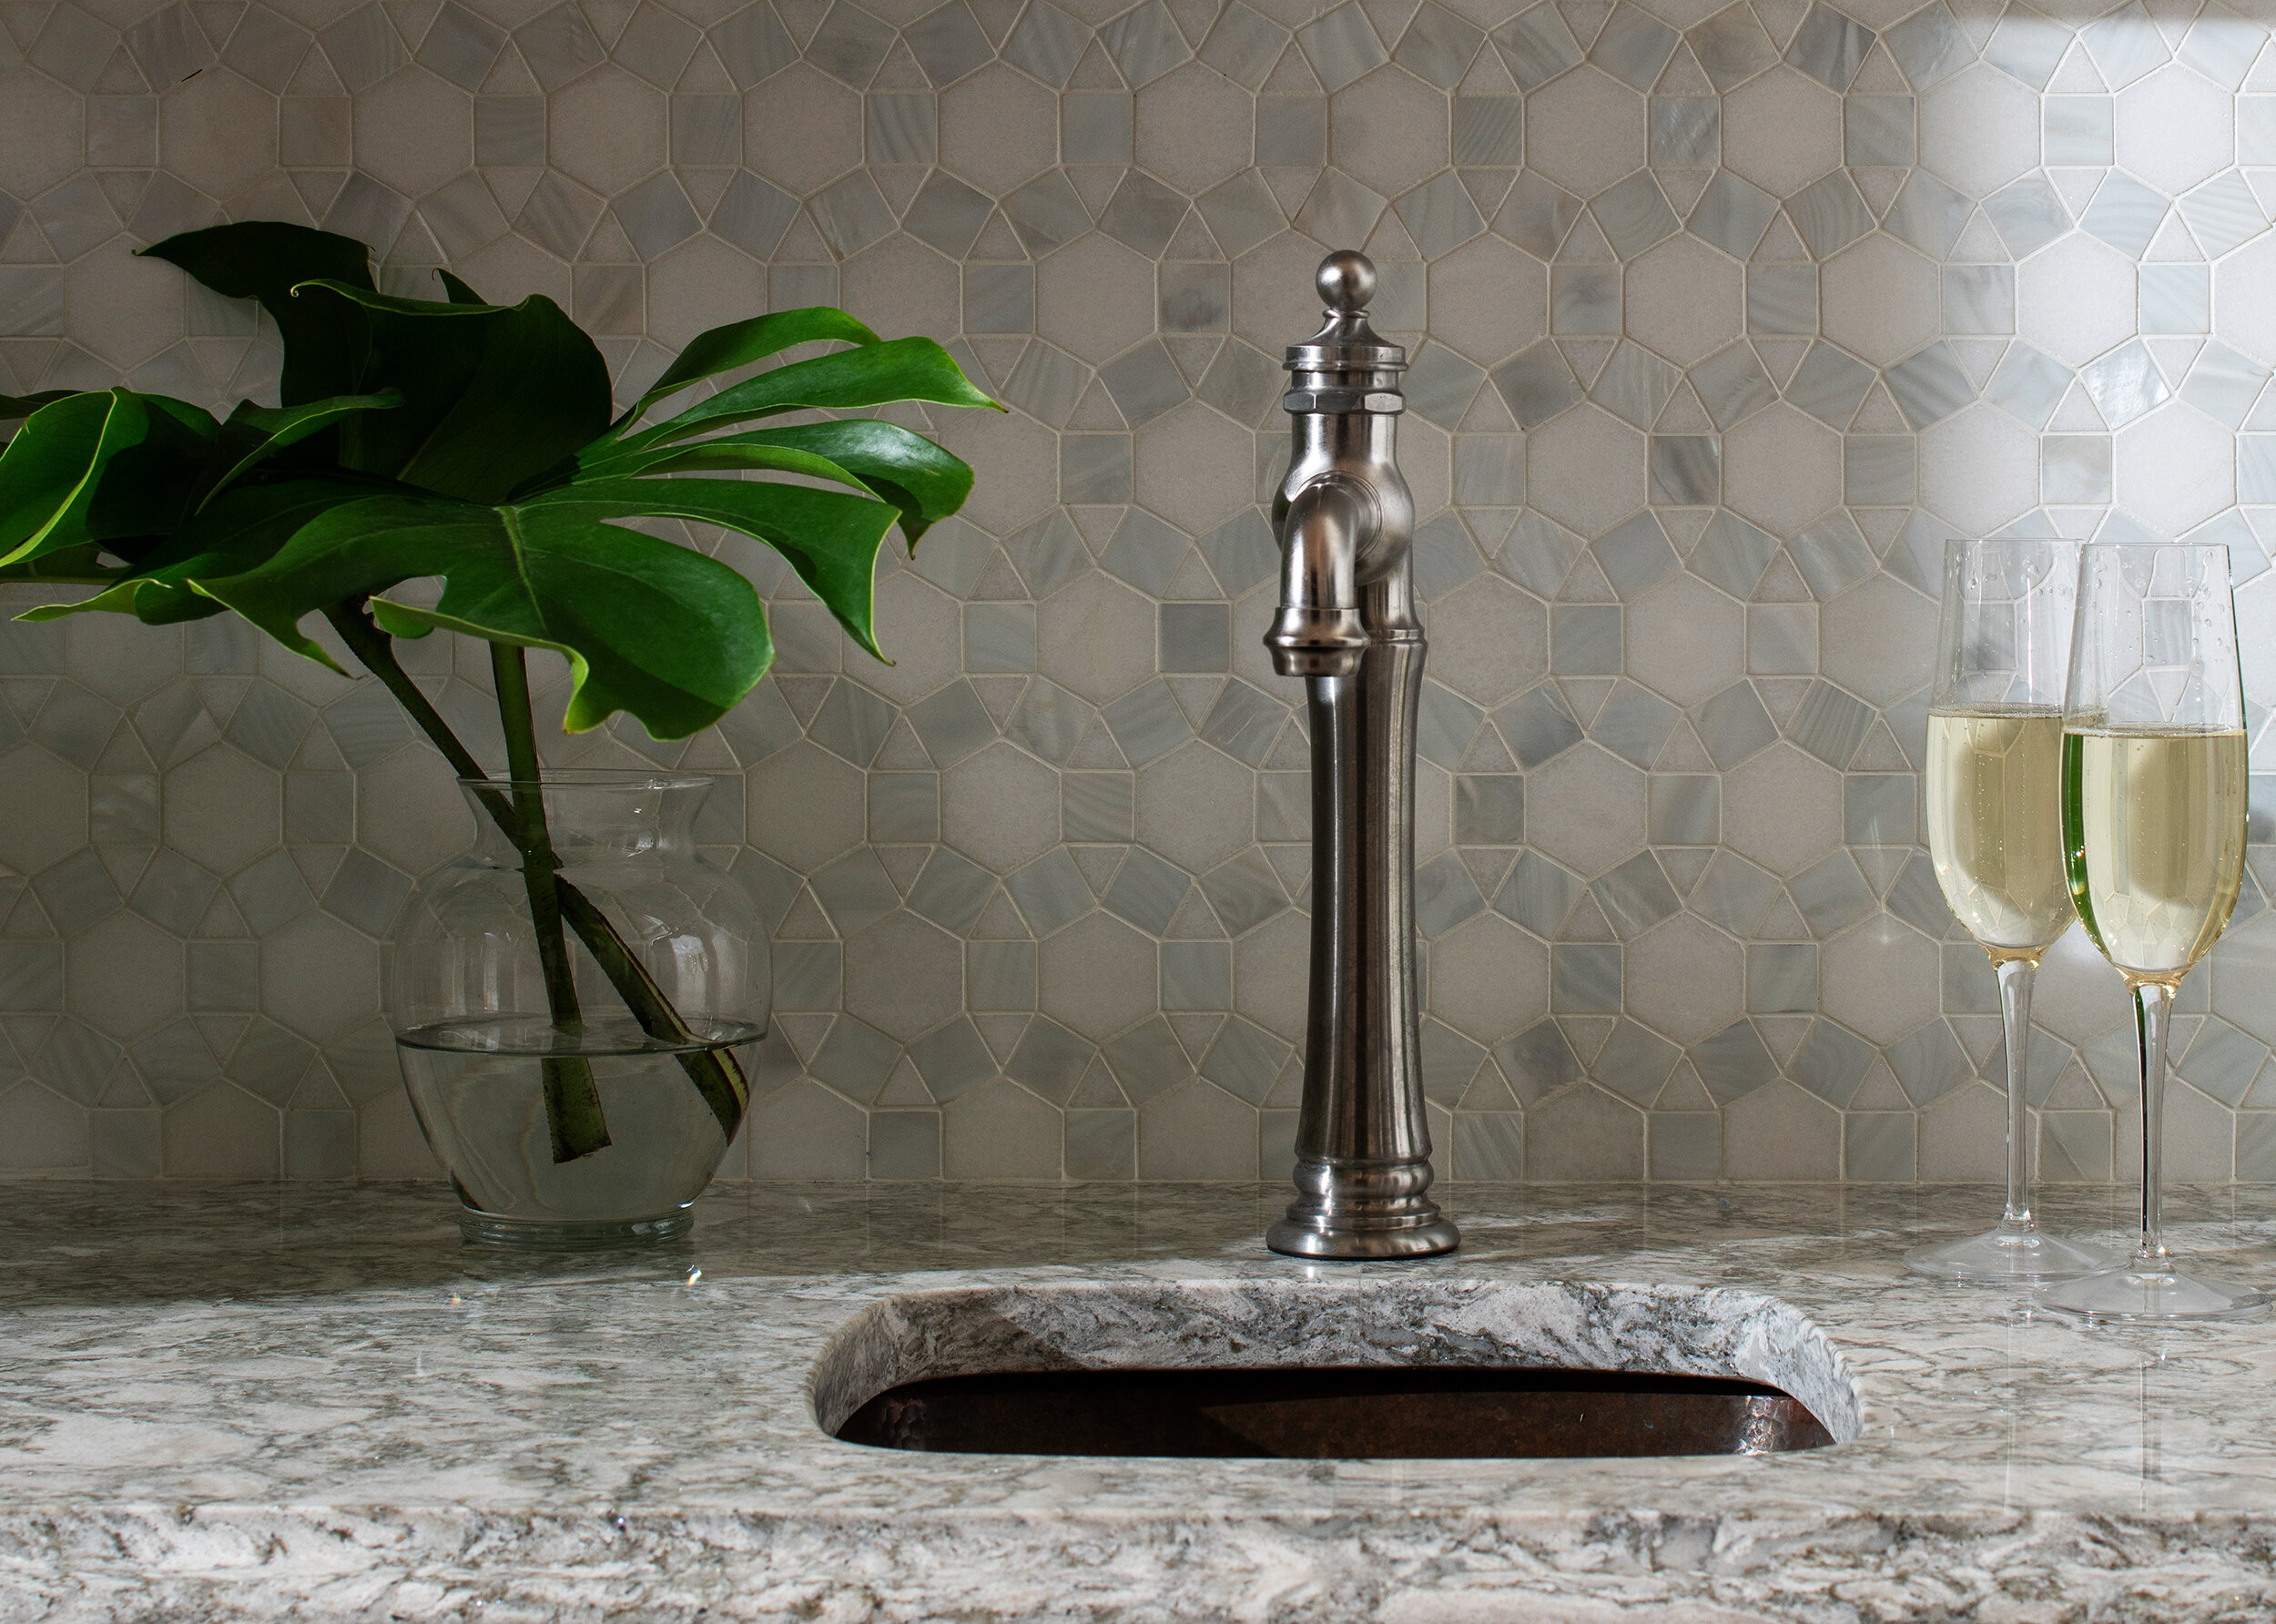 Stainless steel sink skull knob hardware marble counter with pattern backsplash